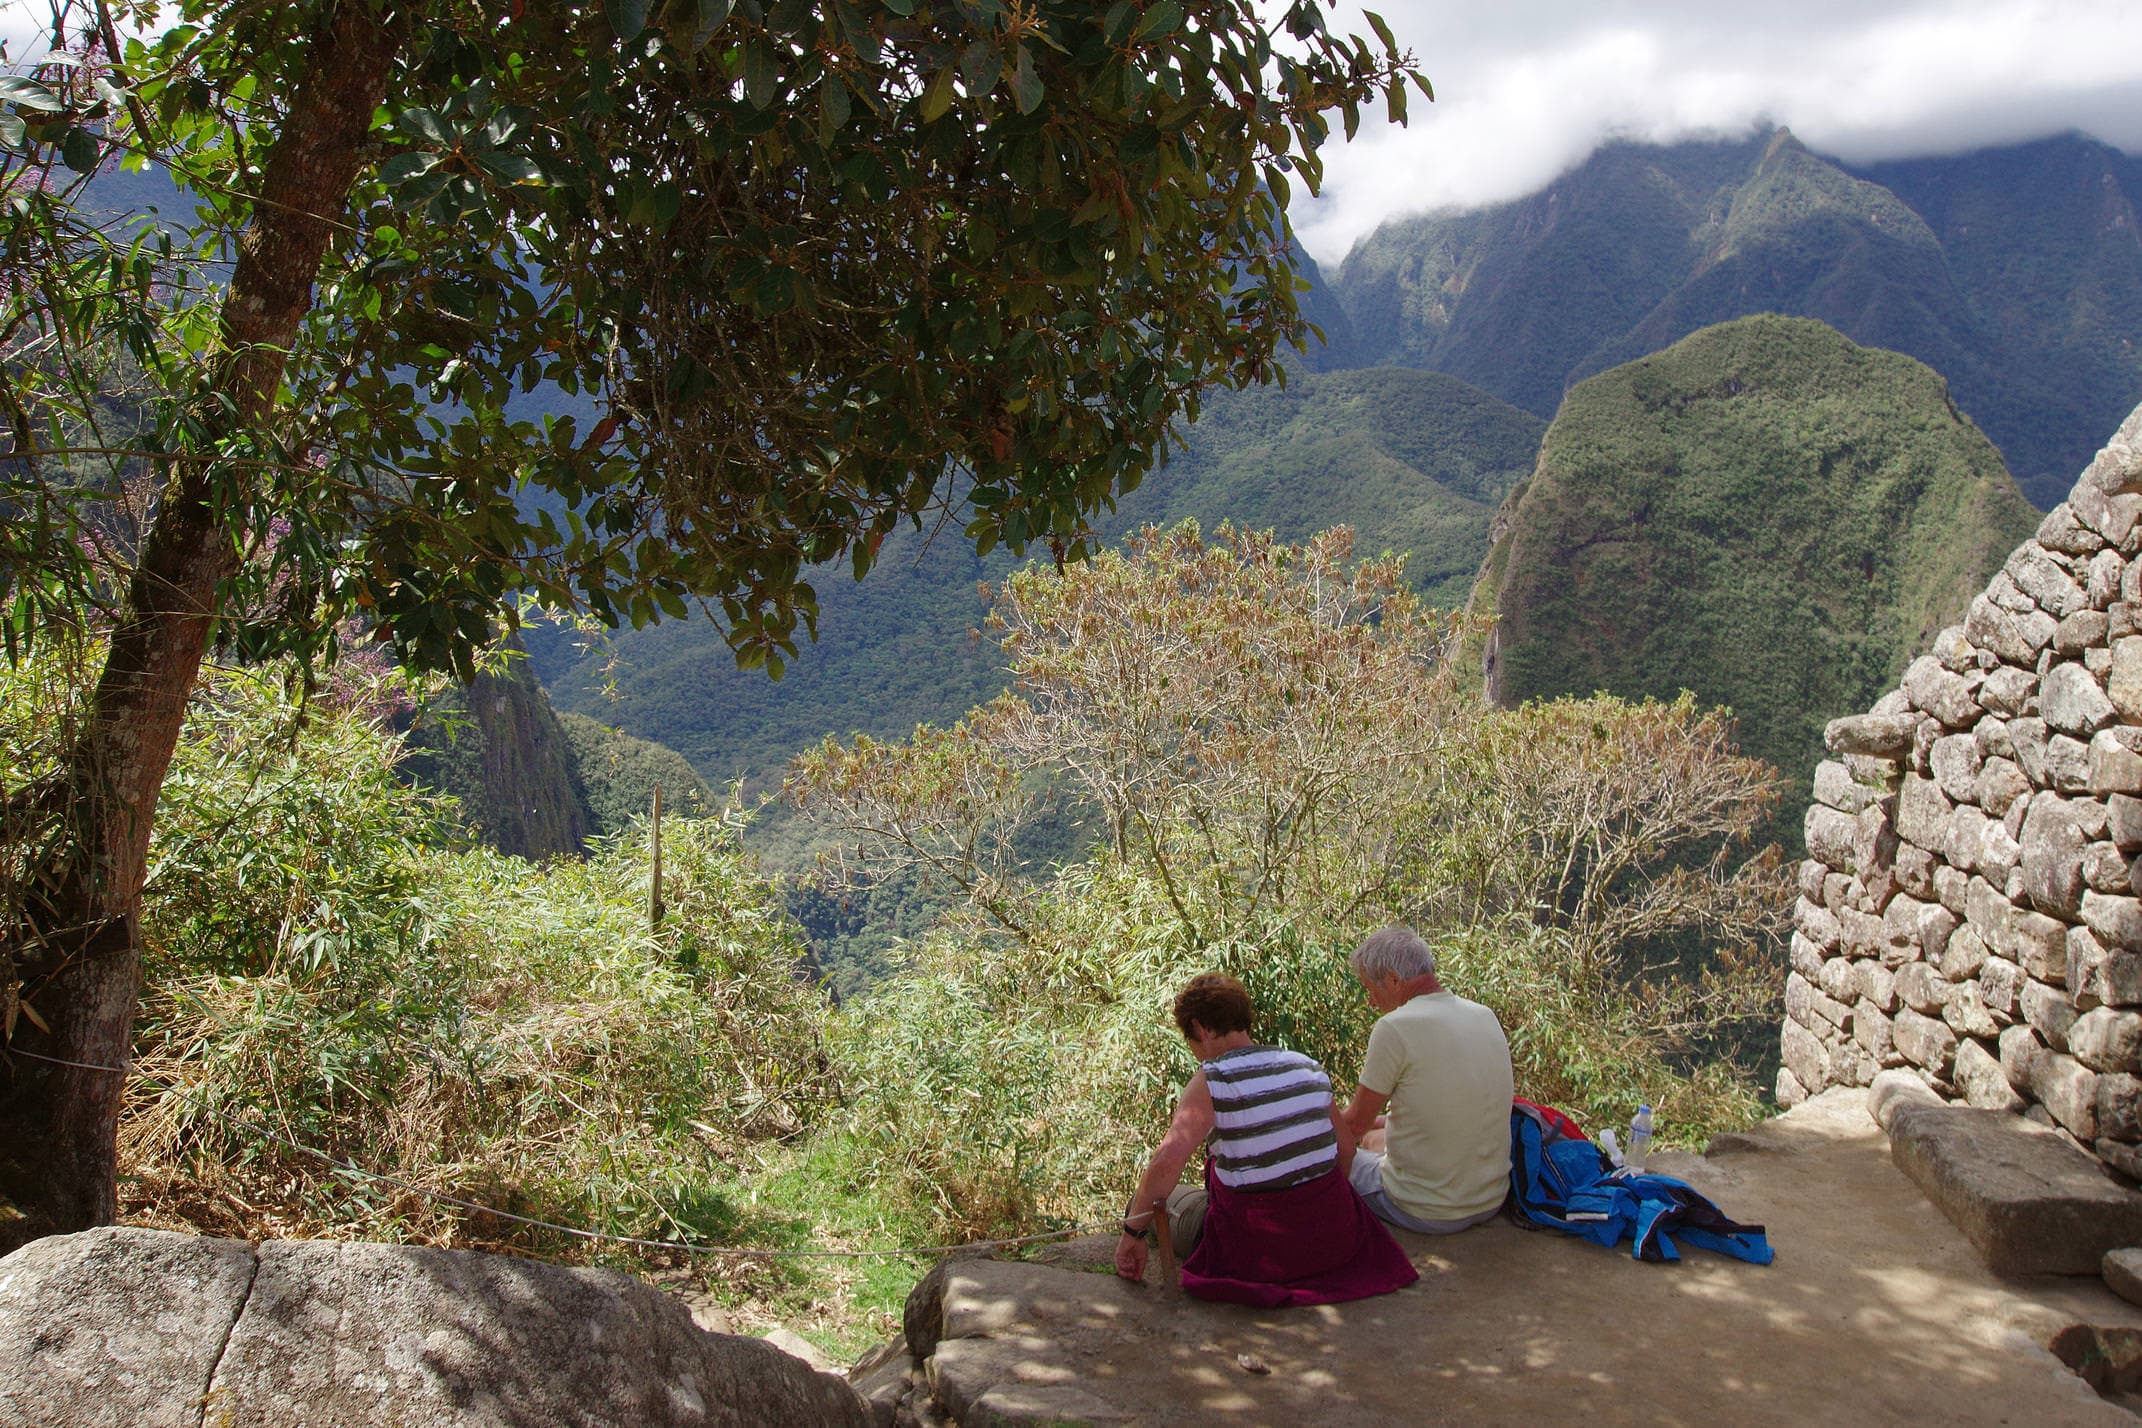 Finding a quiet spot at Machu Picchu chris bladon